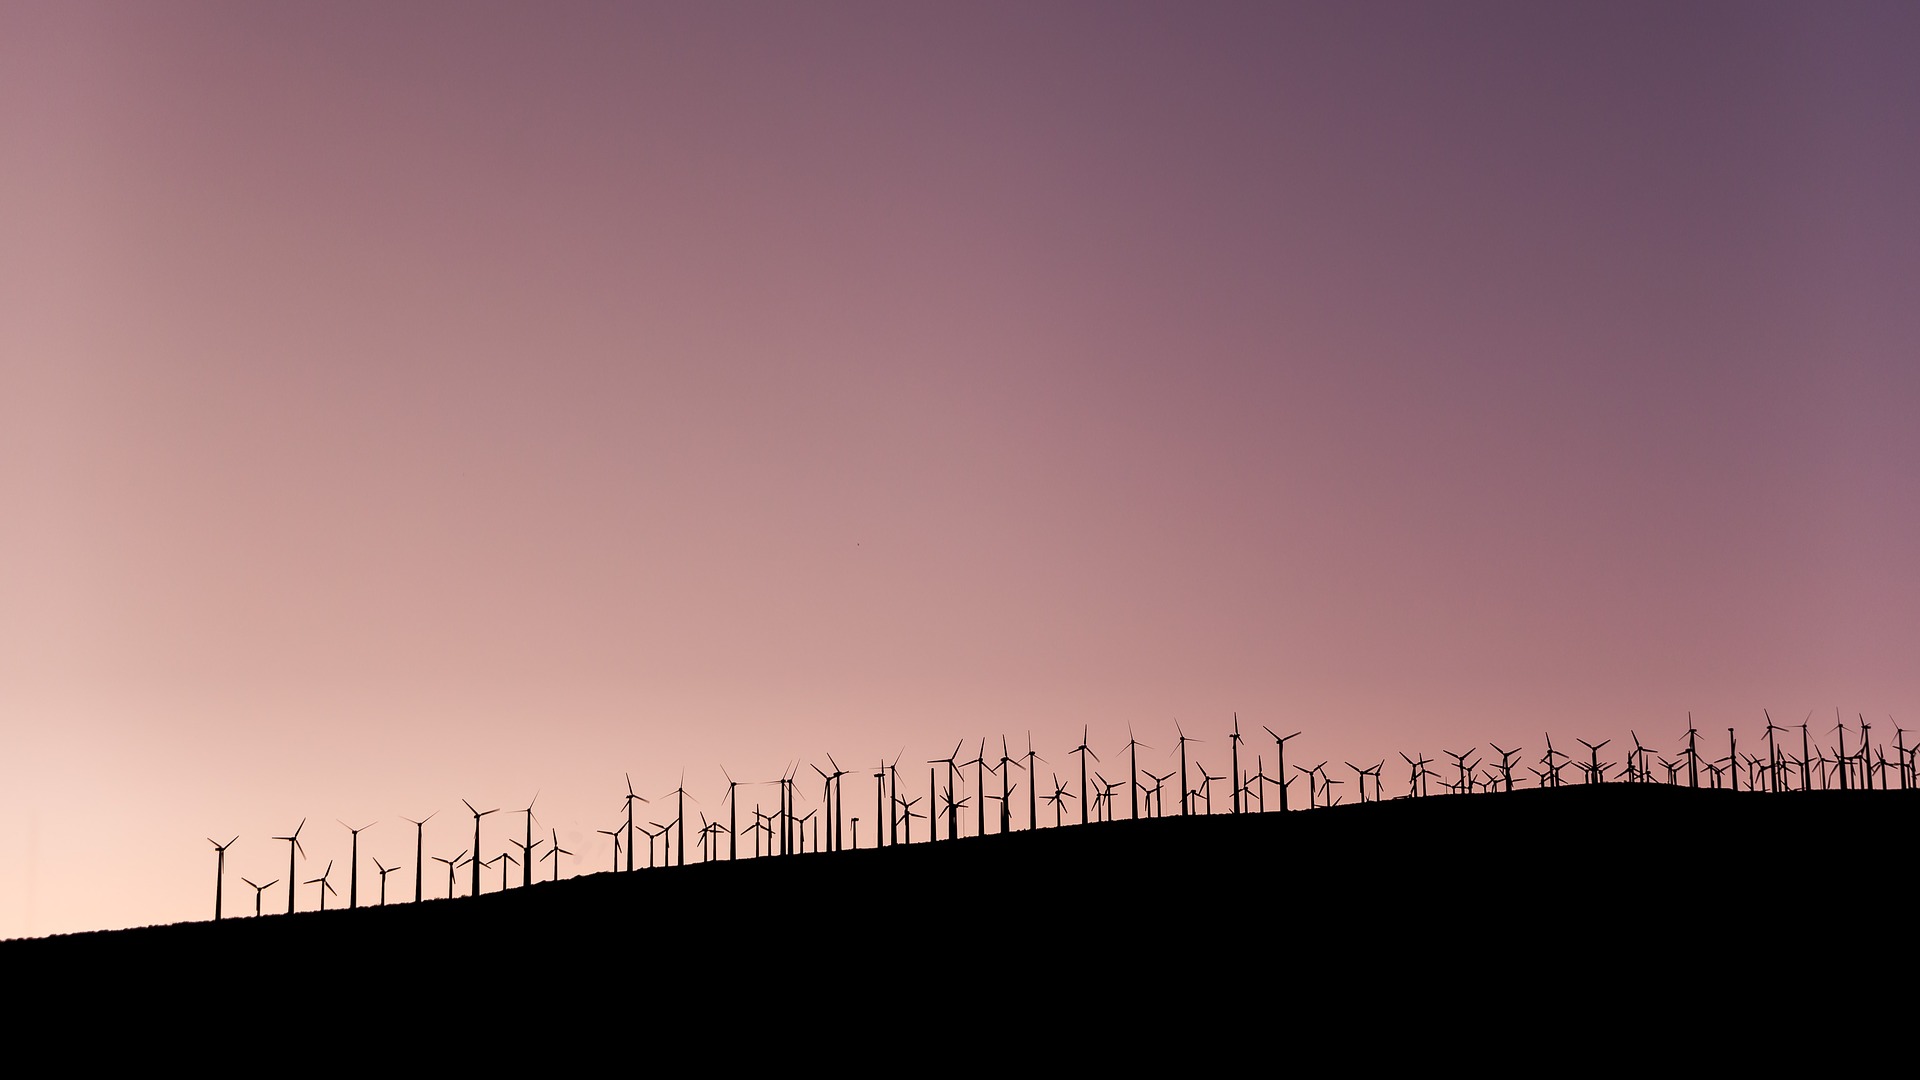 Wind farm, Image: StockSnap via Pixabay